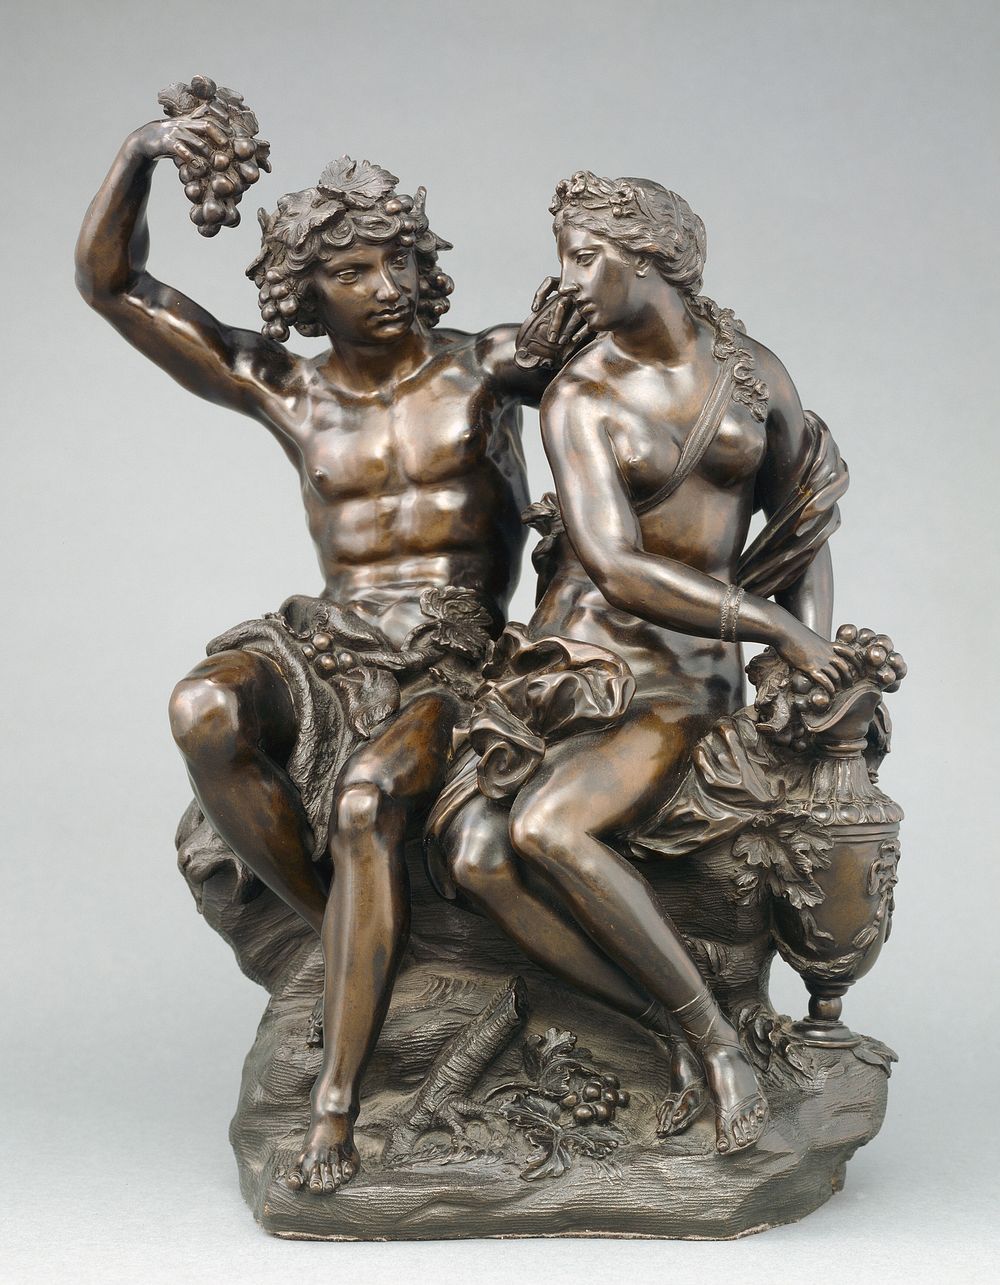 Bacchus and Ariadne by Giuseppe Piamontini